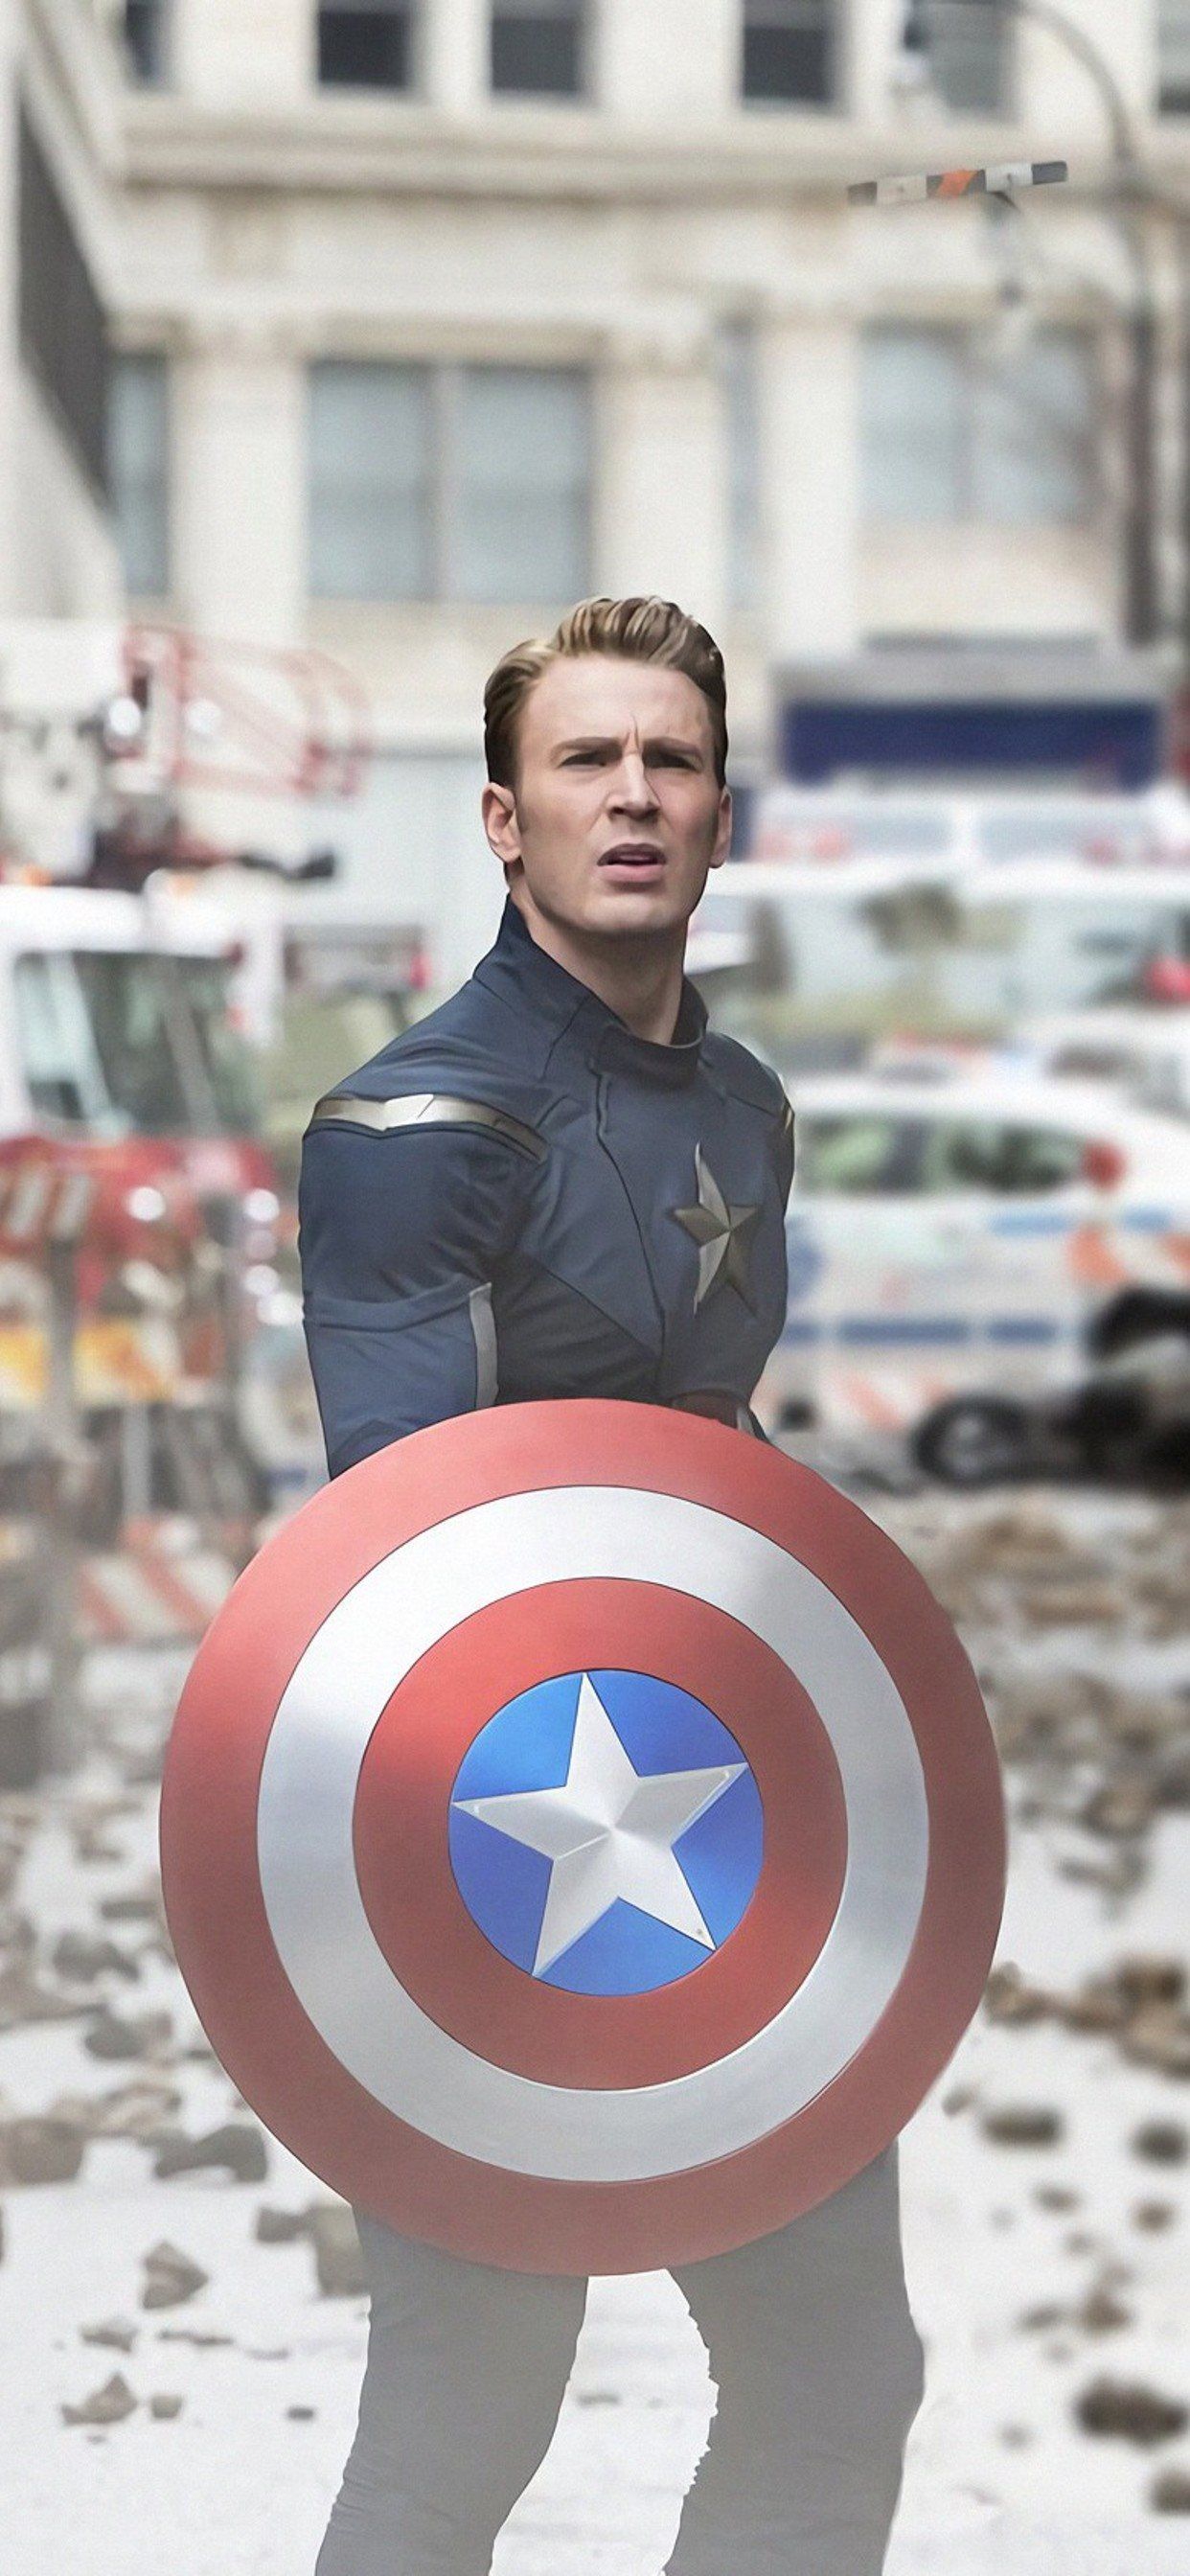 captain america tony stark antman in avengers endg. iPhone X Wallpaper Free Download